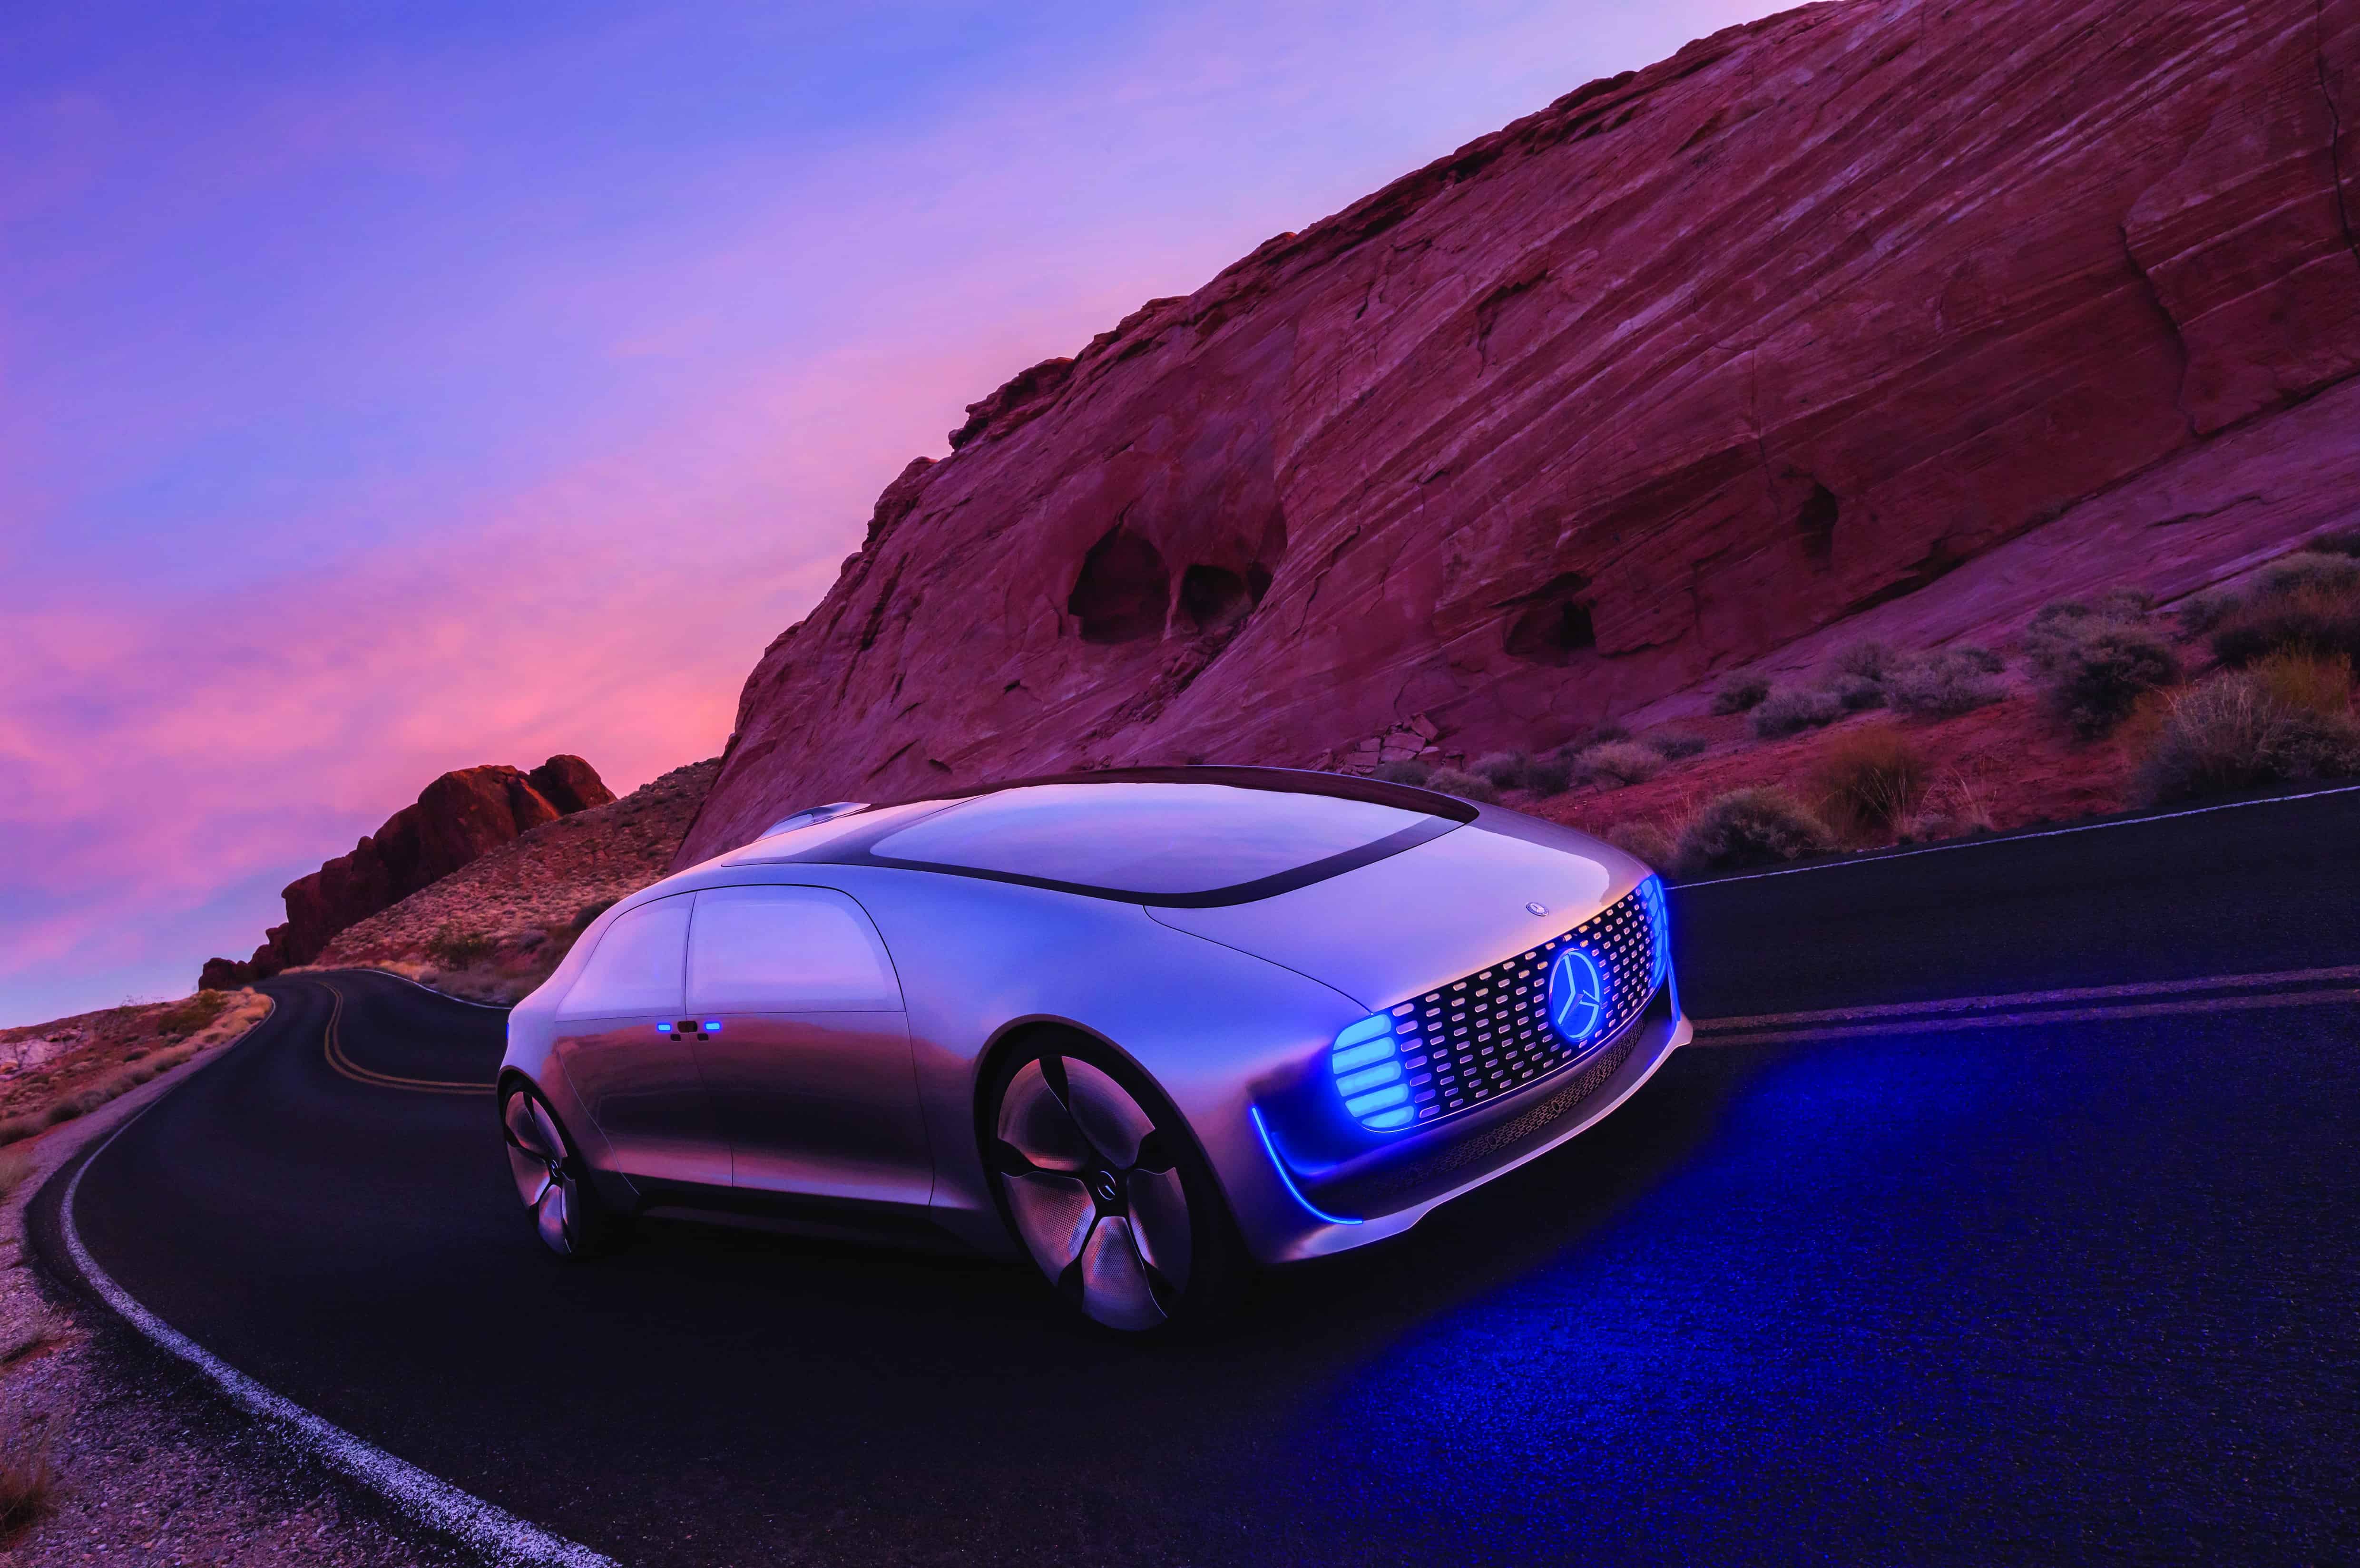 /q/n/k/Mercedes_autonomous_concept_car.jpg